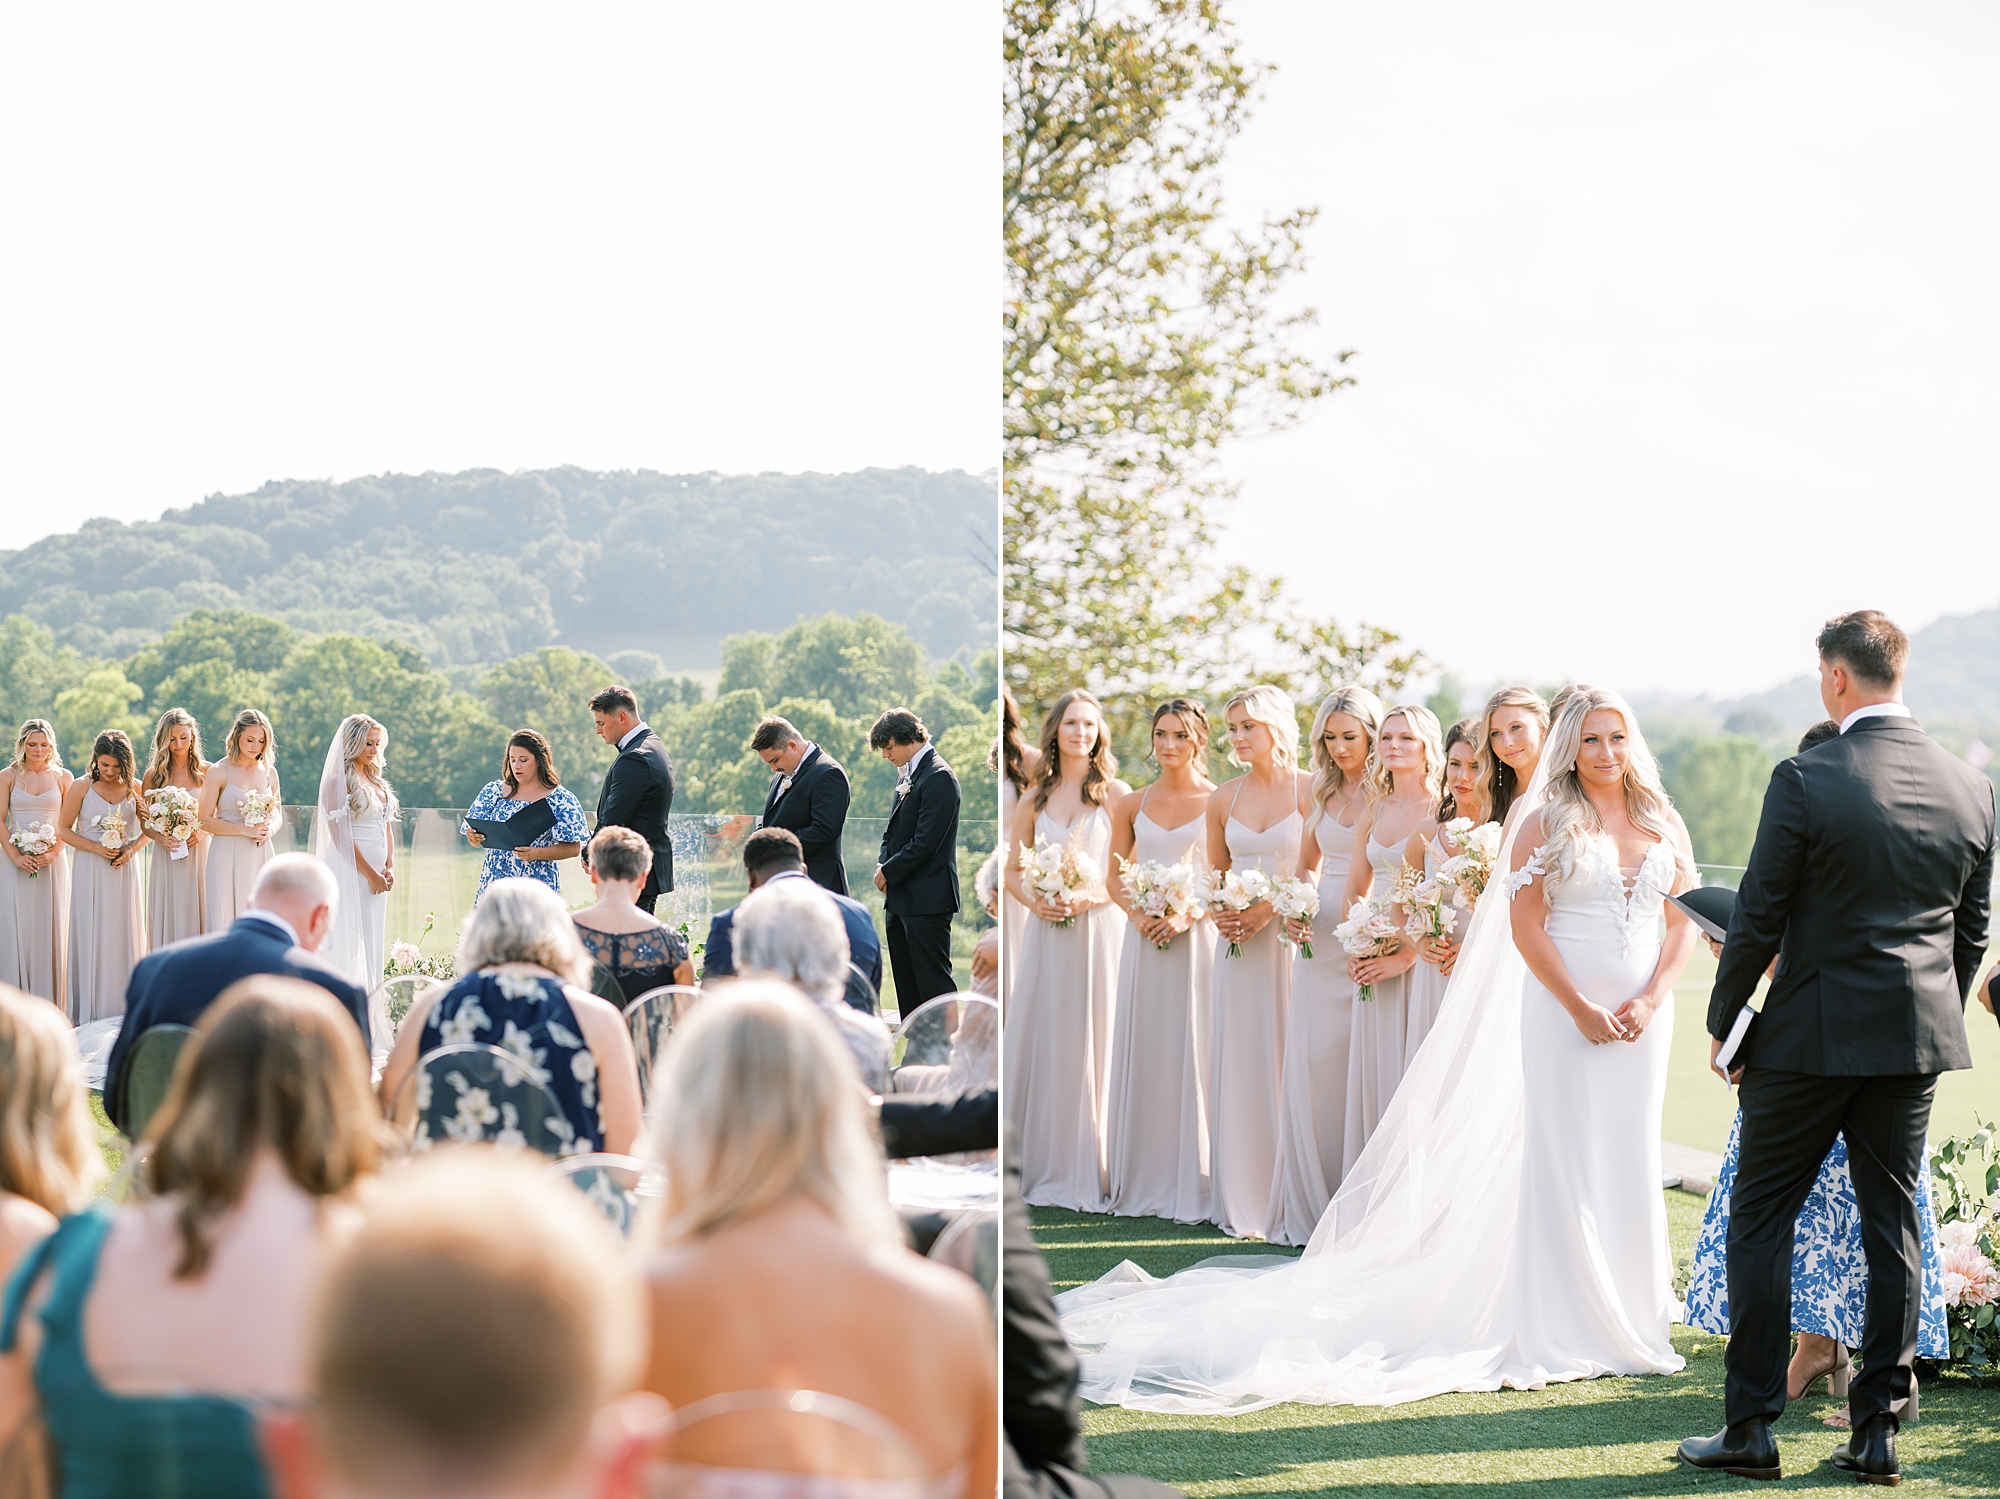 Nashville wedding ceremony at Scenic Diamond Creek Farms